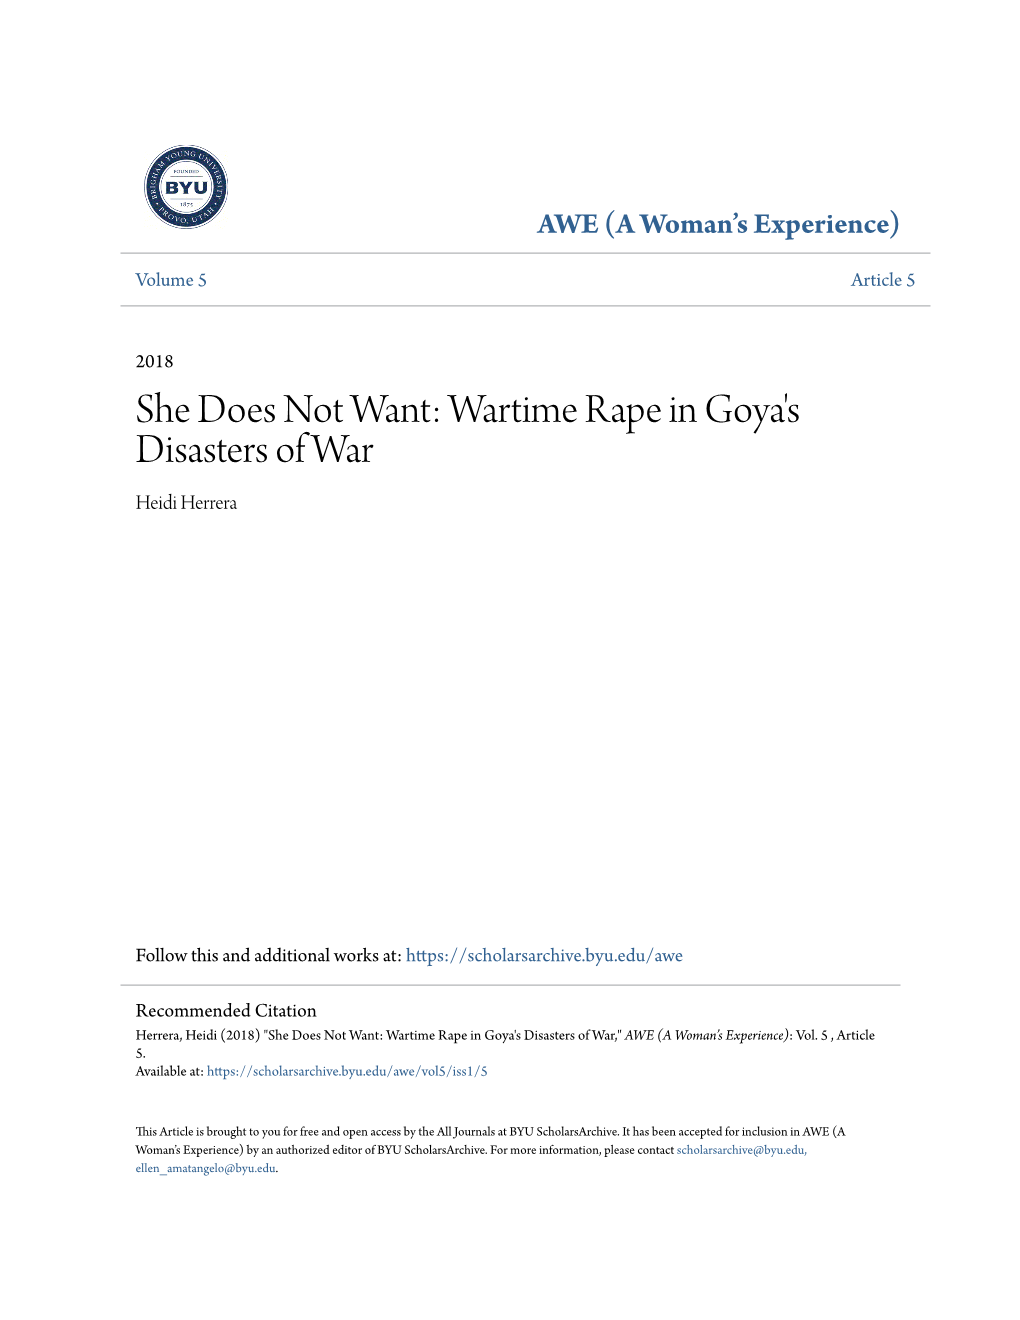 Wartime Rape in Goya's Disasters of War Heidi Herrera